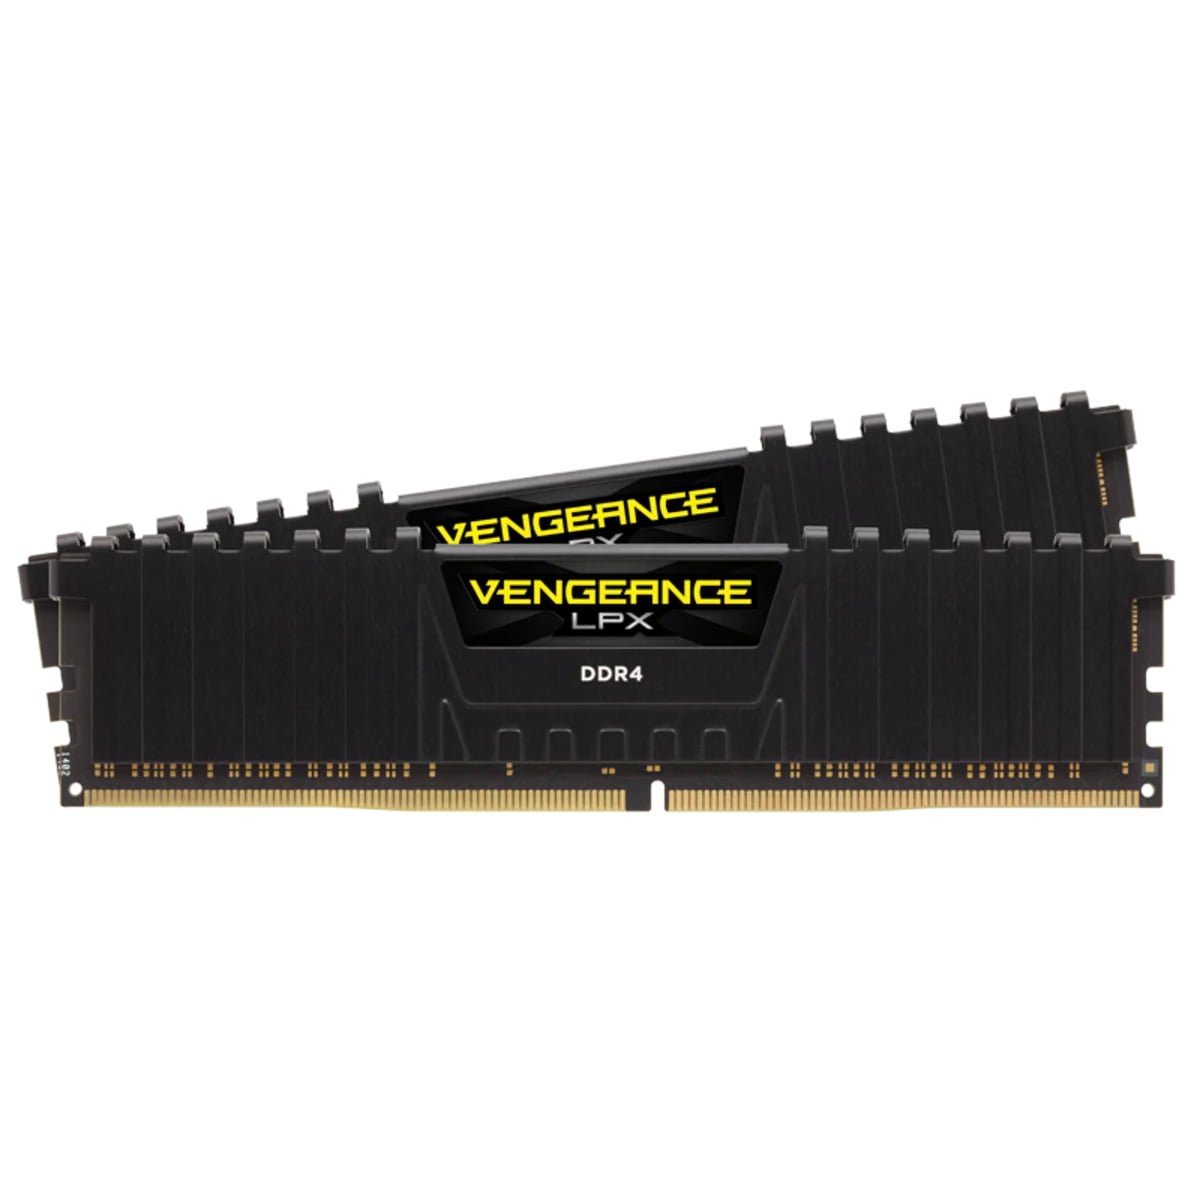 RAM CORSAIR VENGEANCE LPX 8GB (2x4GB) DDR4 2400MHz - CMK8GX4M2A2400C14